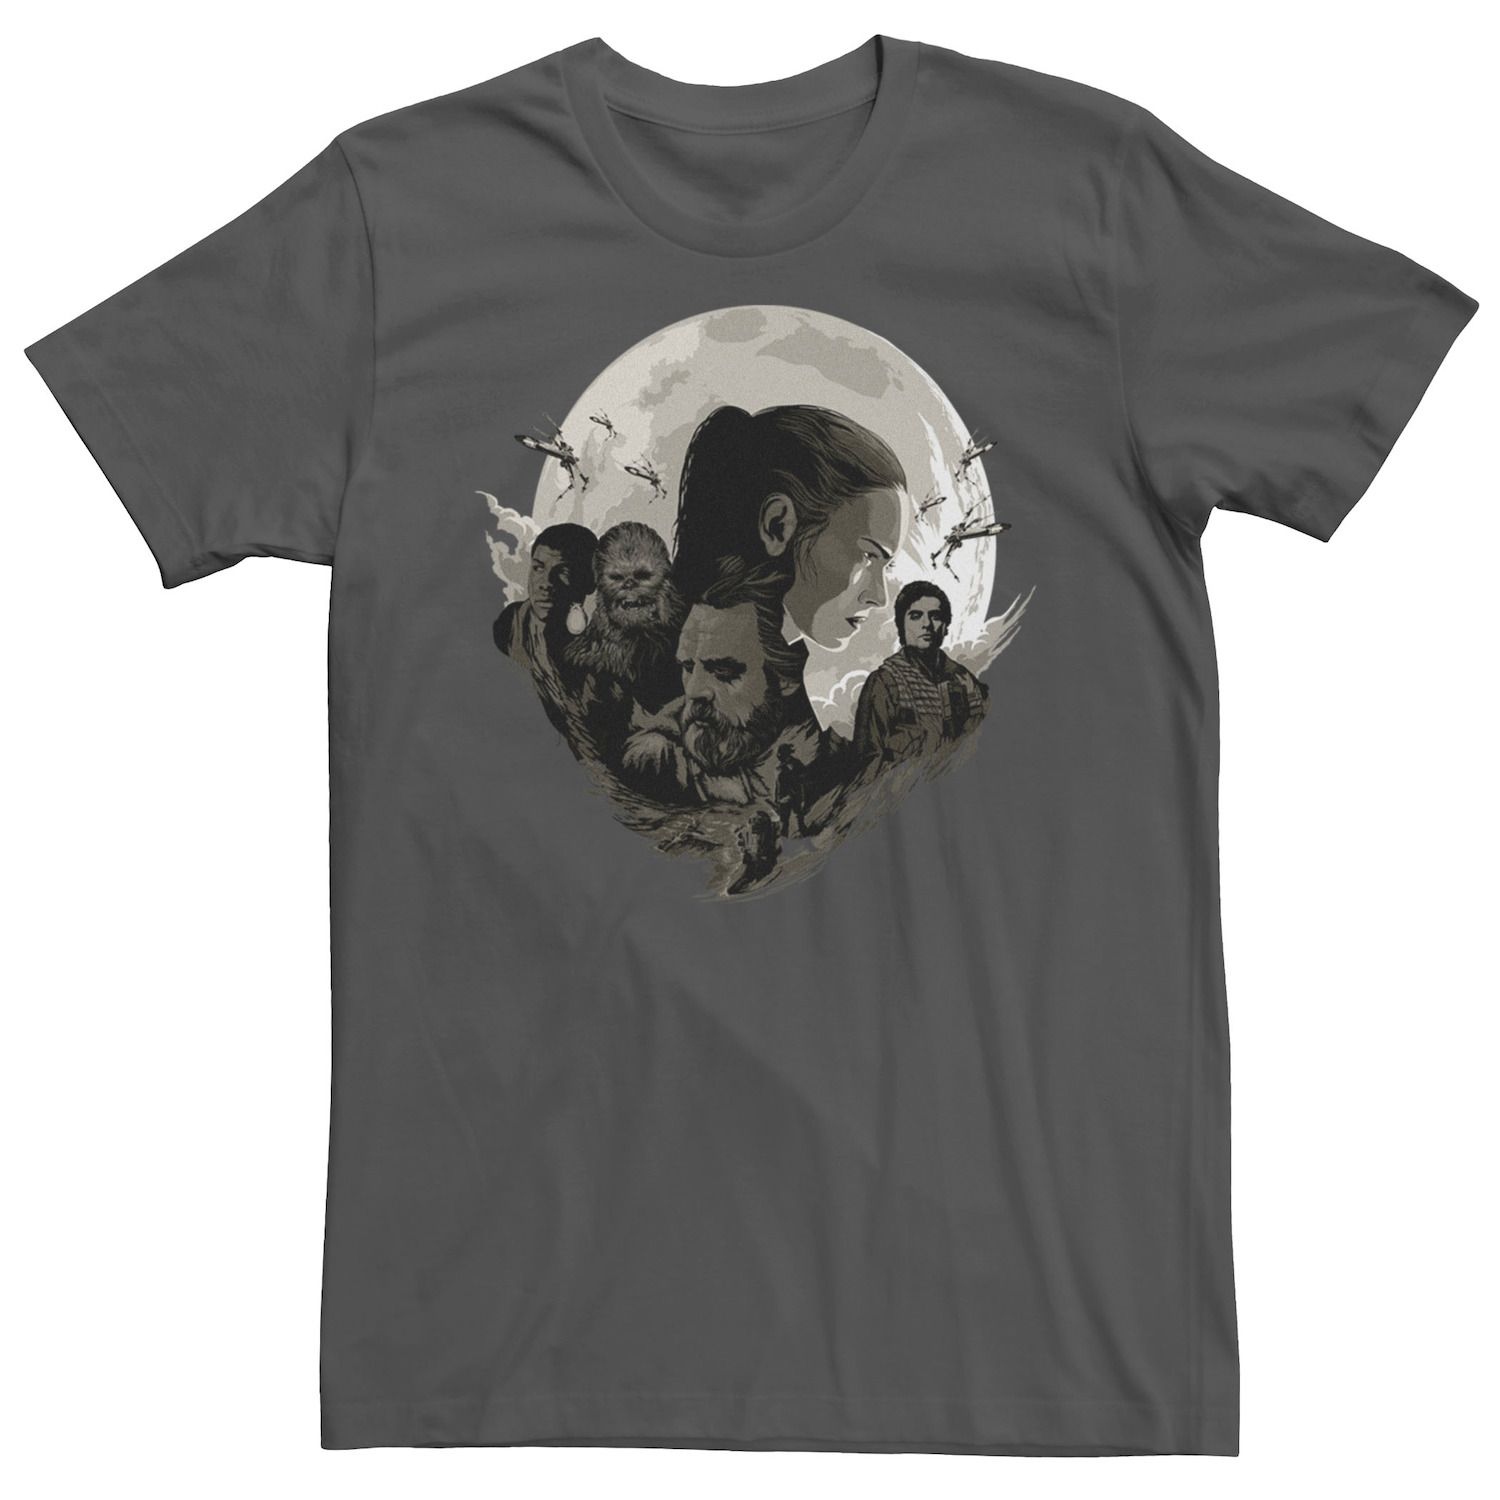 Мужская футболка с луной «Последние джедаи-повстанцы из «Звездных войн»» Licensed Character